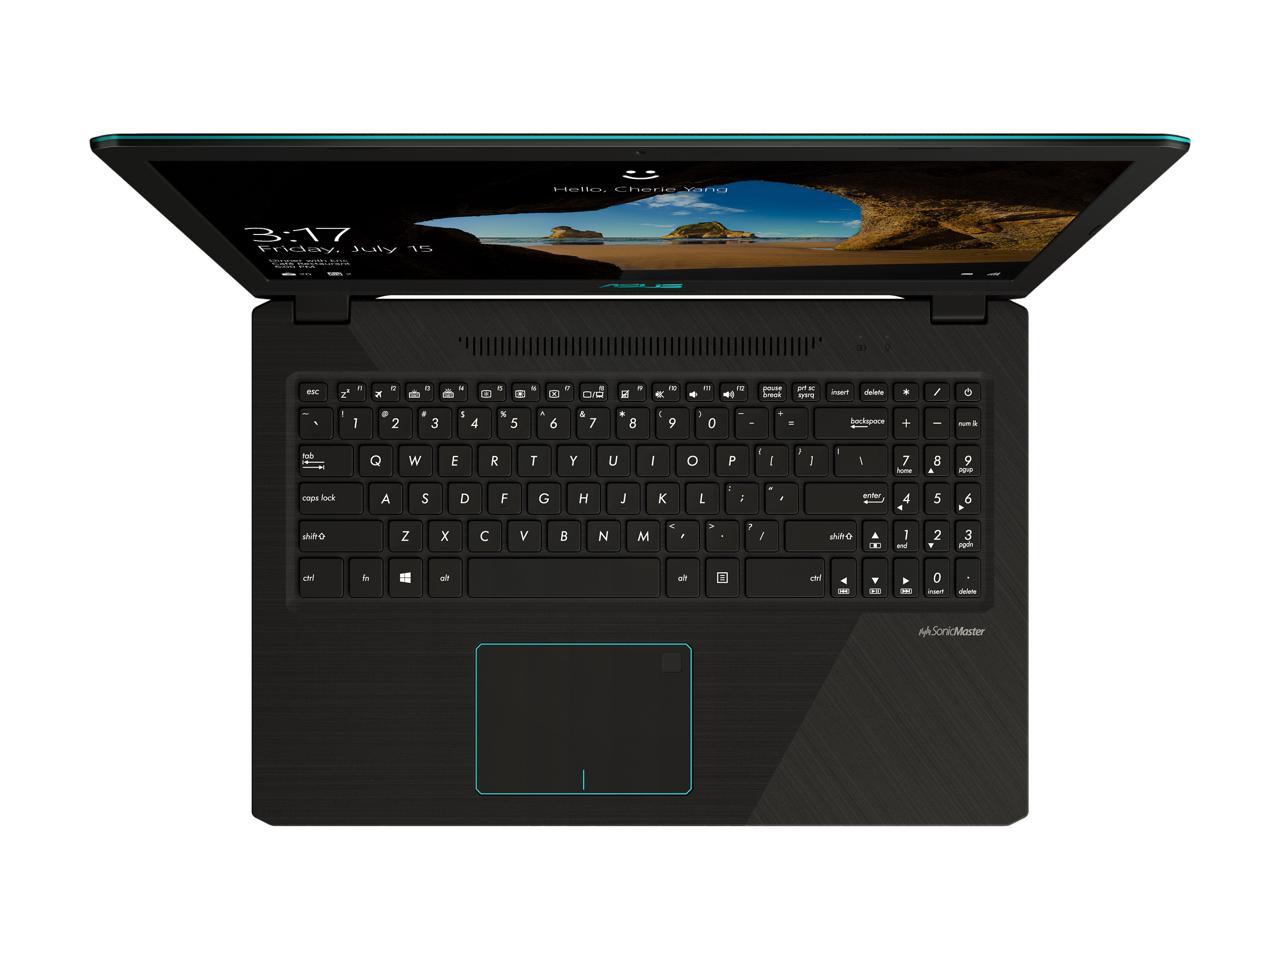 Asus K570ud Ds74 Gaming Laptop Intel Core I7 8550u 180 Ghz 156